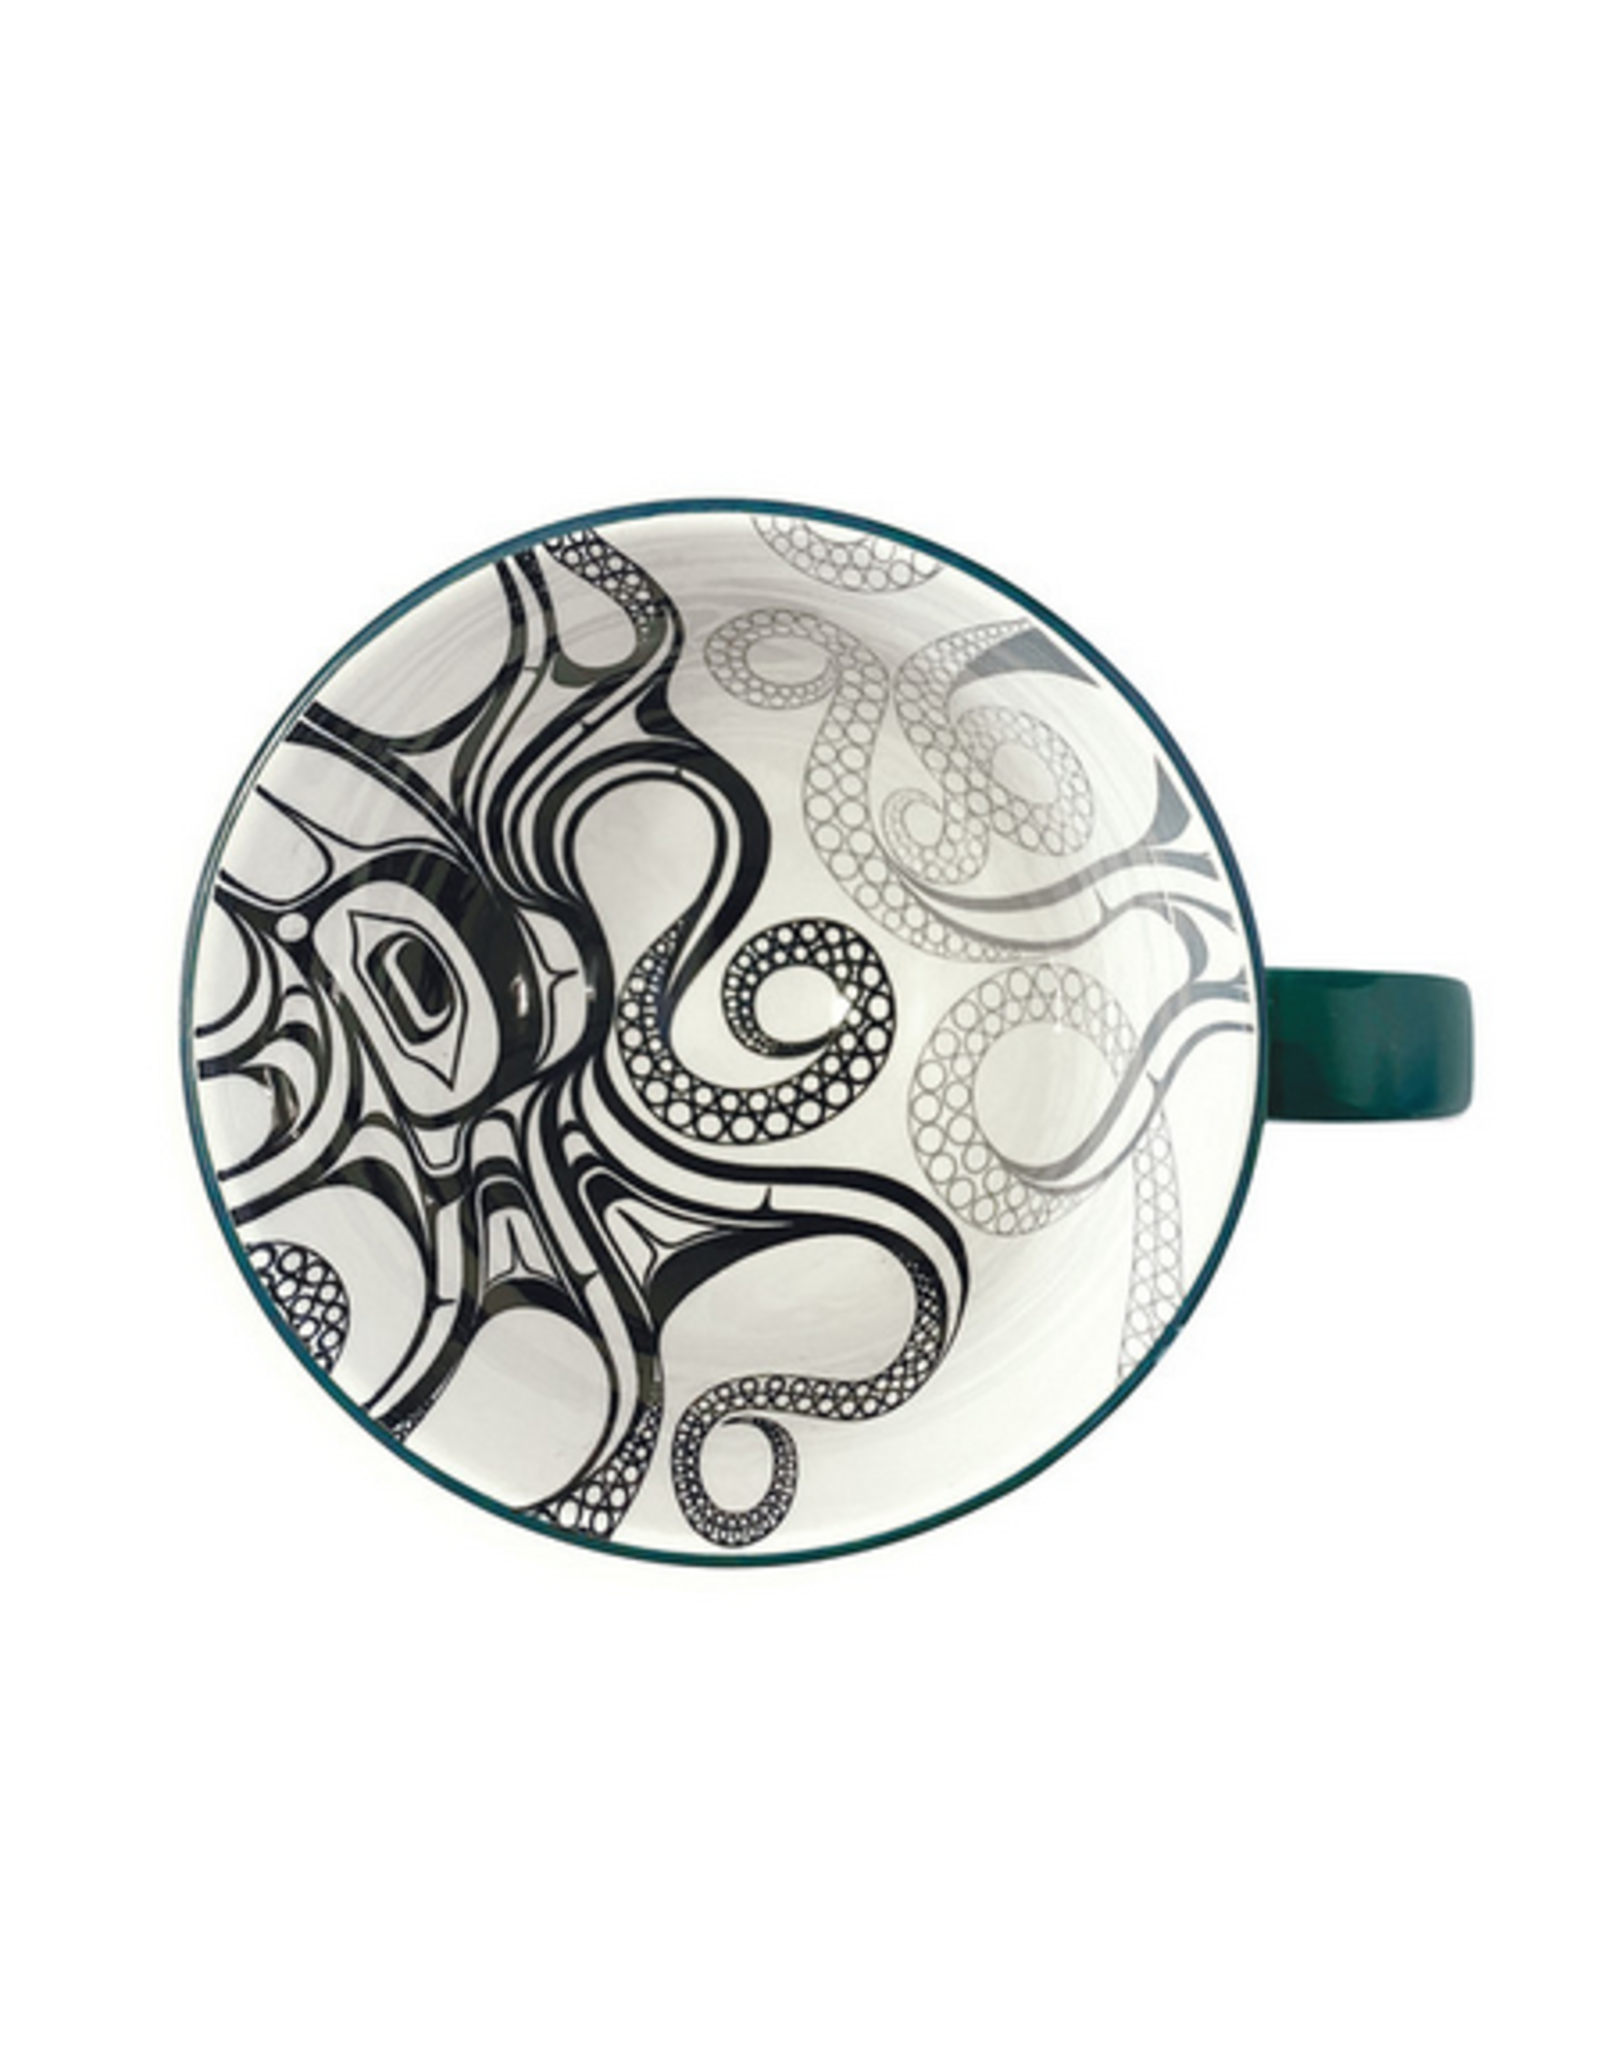 Porcelain Art Mug - Octopus by Ernest Swanson (PMUG19)